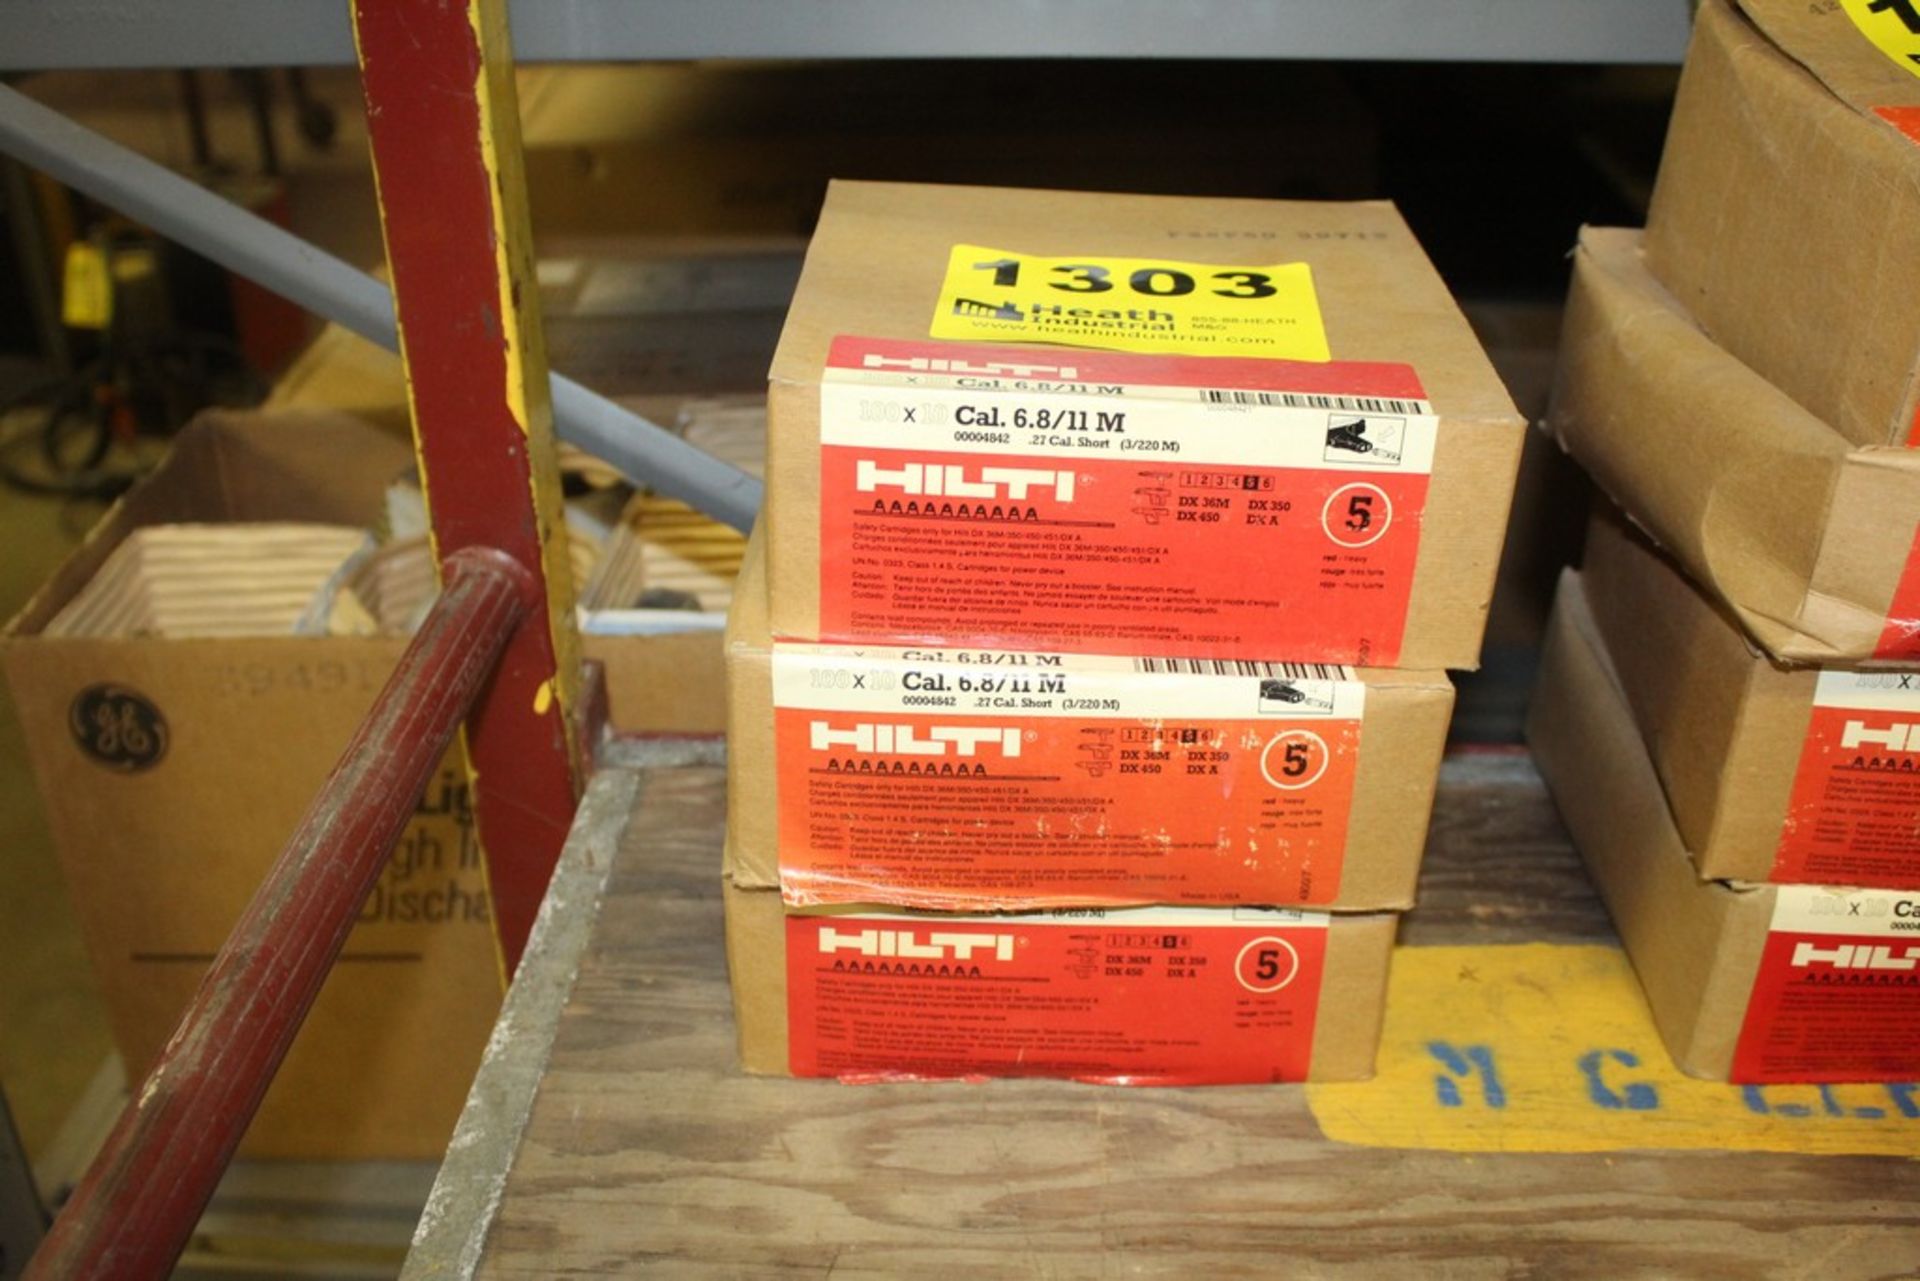 (3) BOXES OF HILTI POWDER LOADS